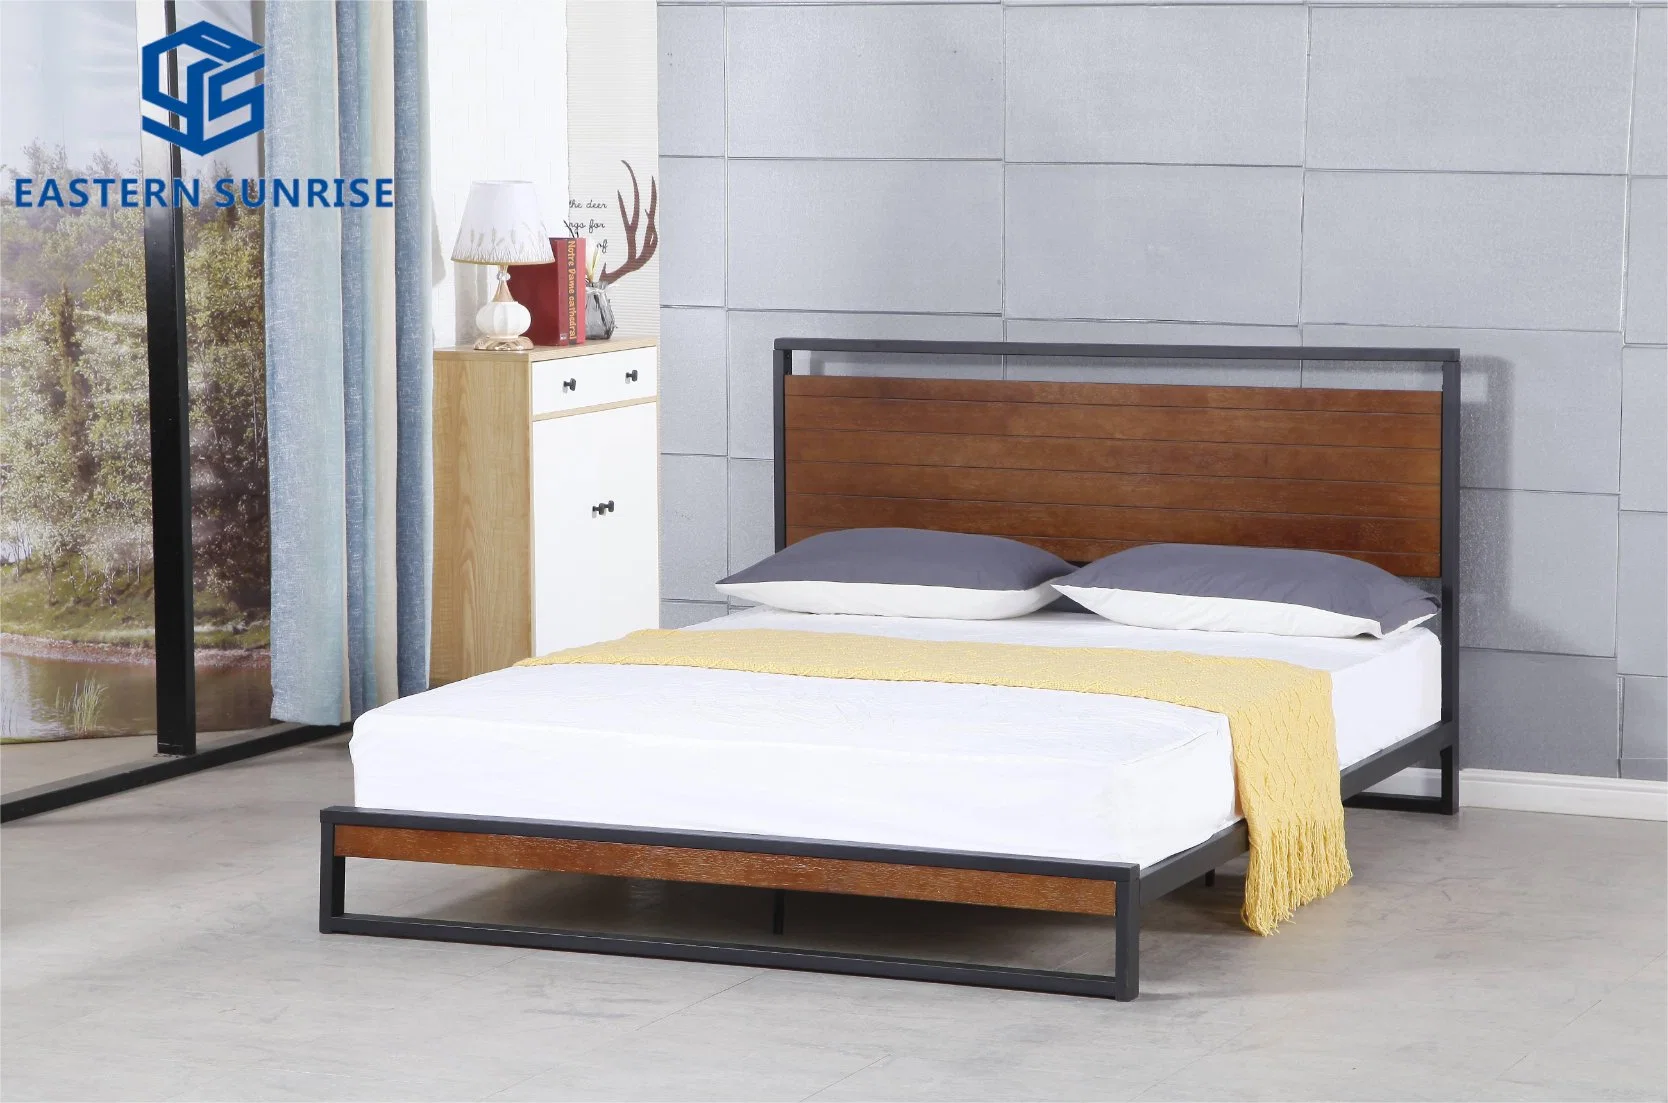 Modern Design Wooden Headboard and Metal Bed Frame Home Steel Bed